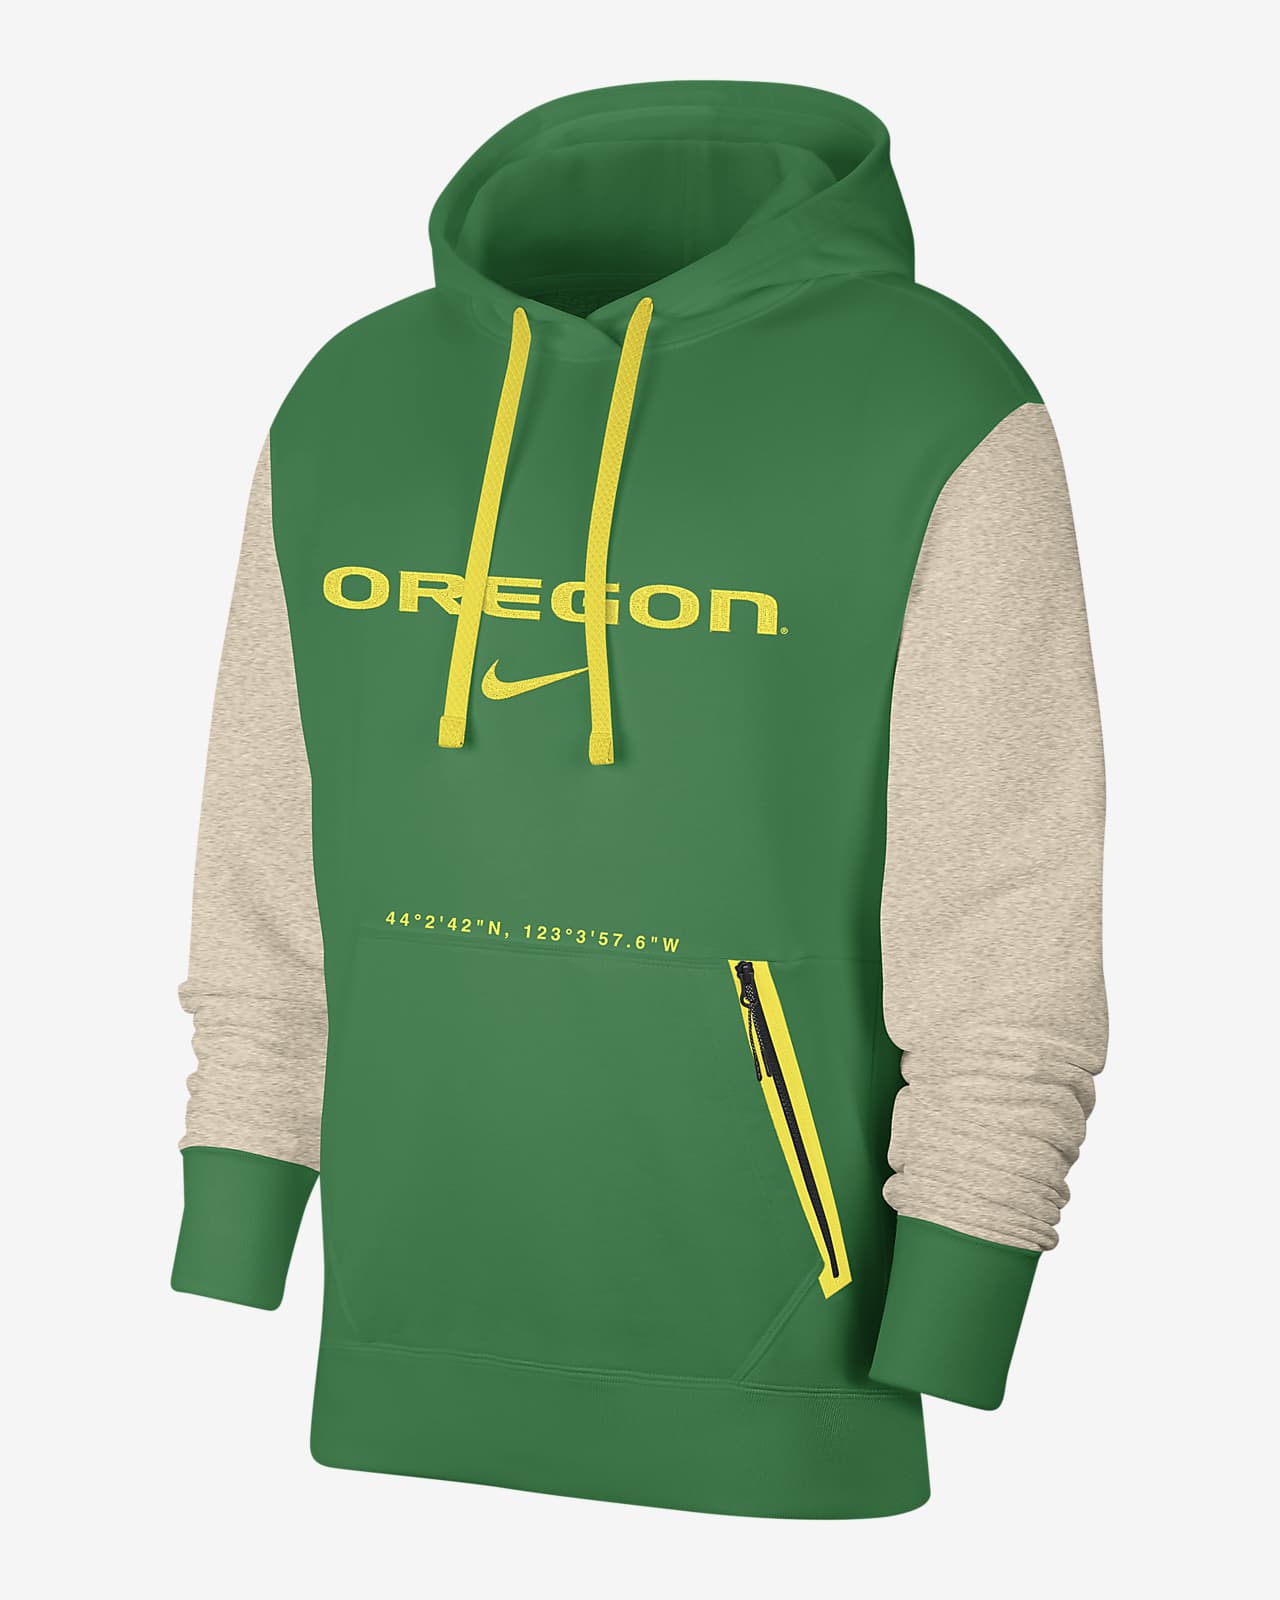 green nike hoodie with orange logo